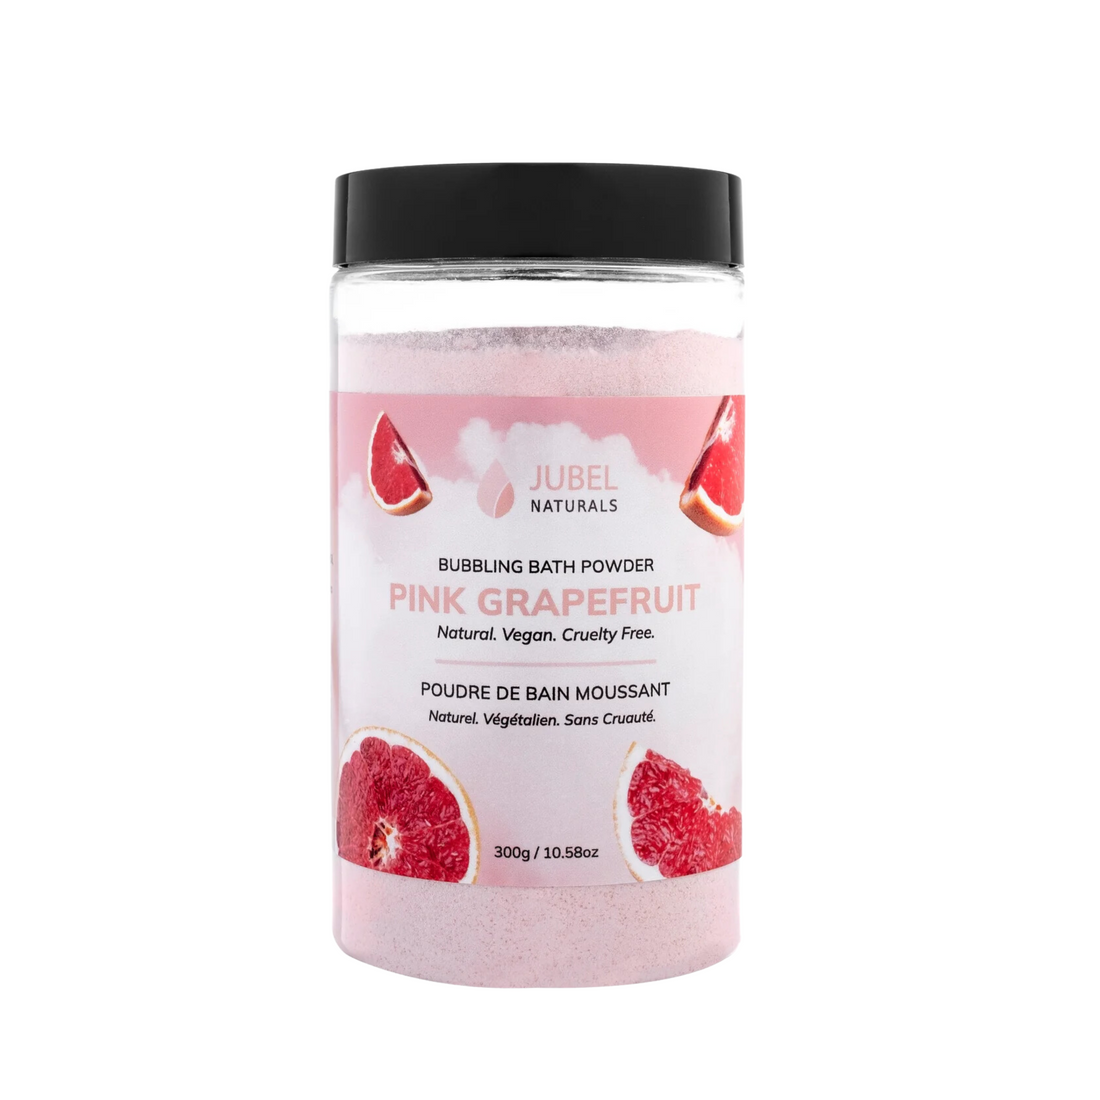 Pink Grapefruit Bubbling Bath Powder